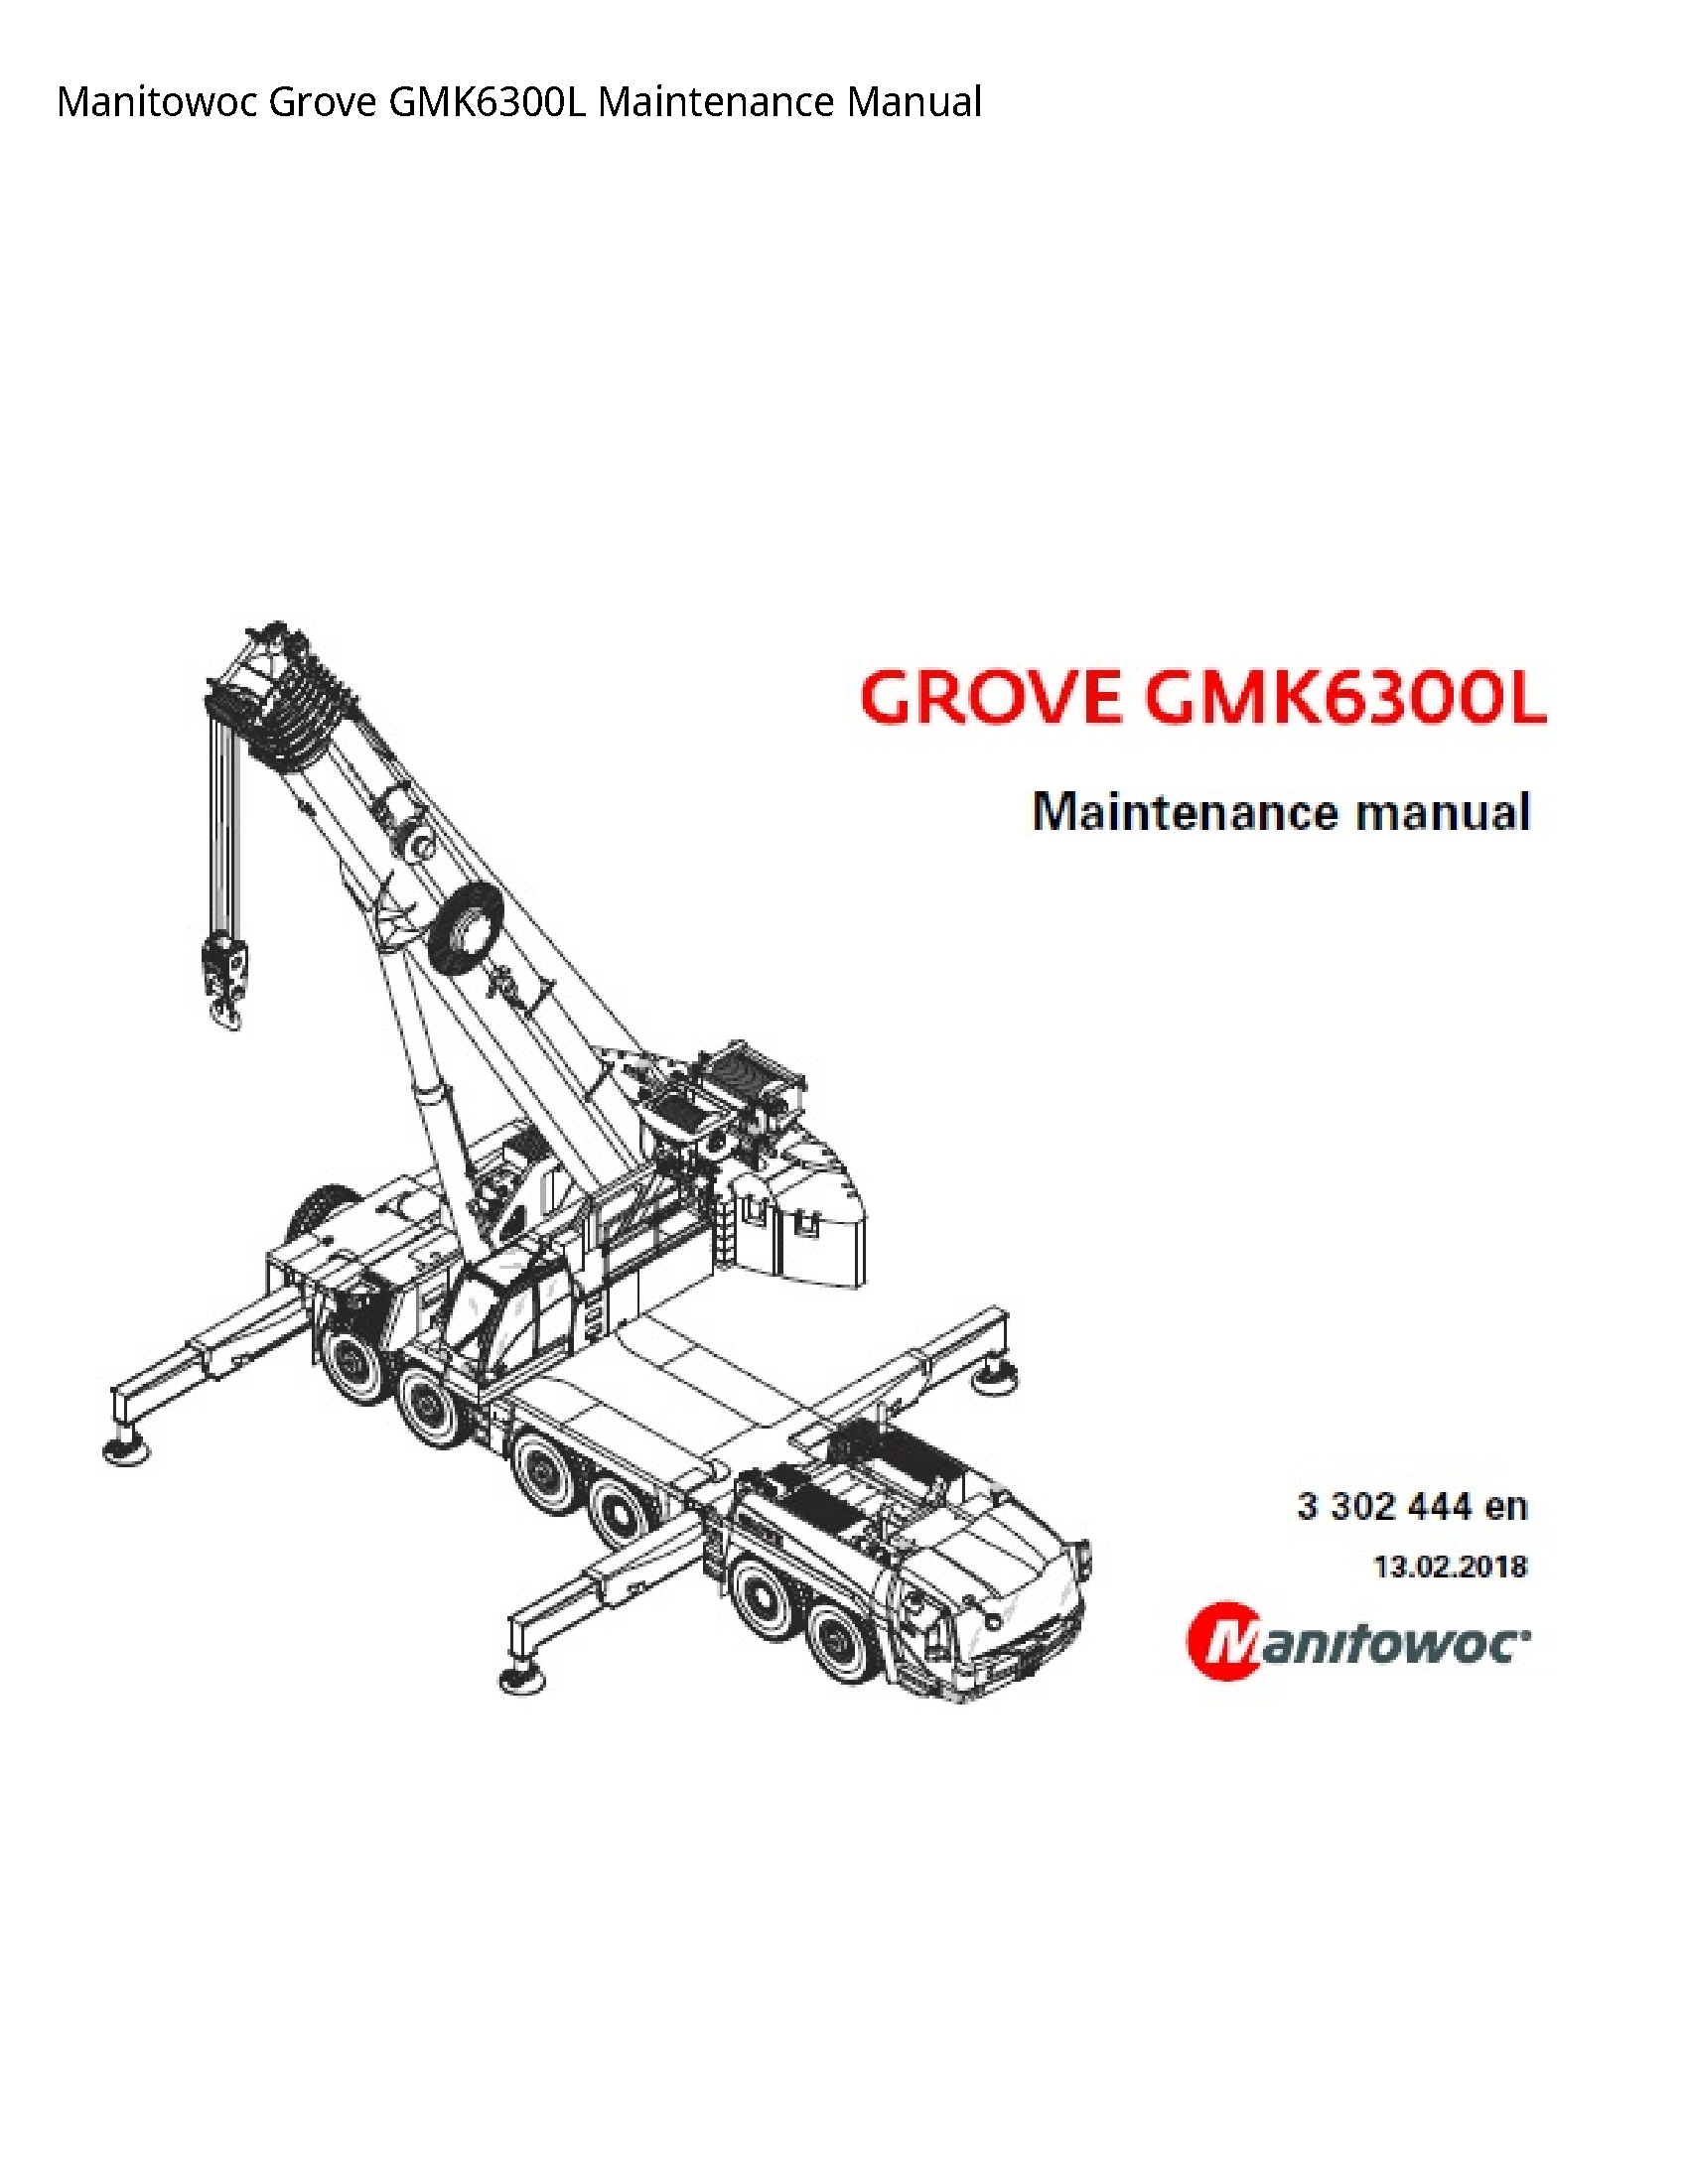 Manitowoc GMK6300L Grove Maintenance manual